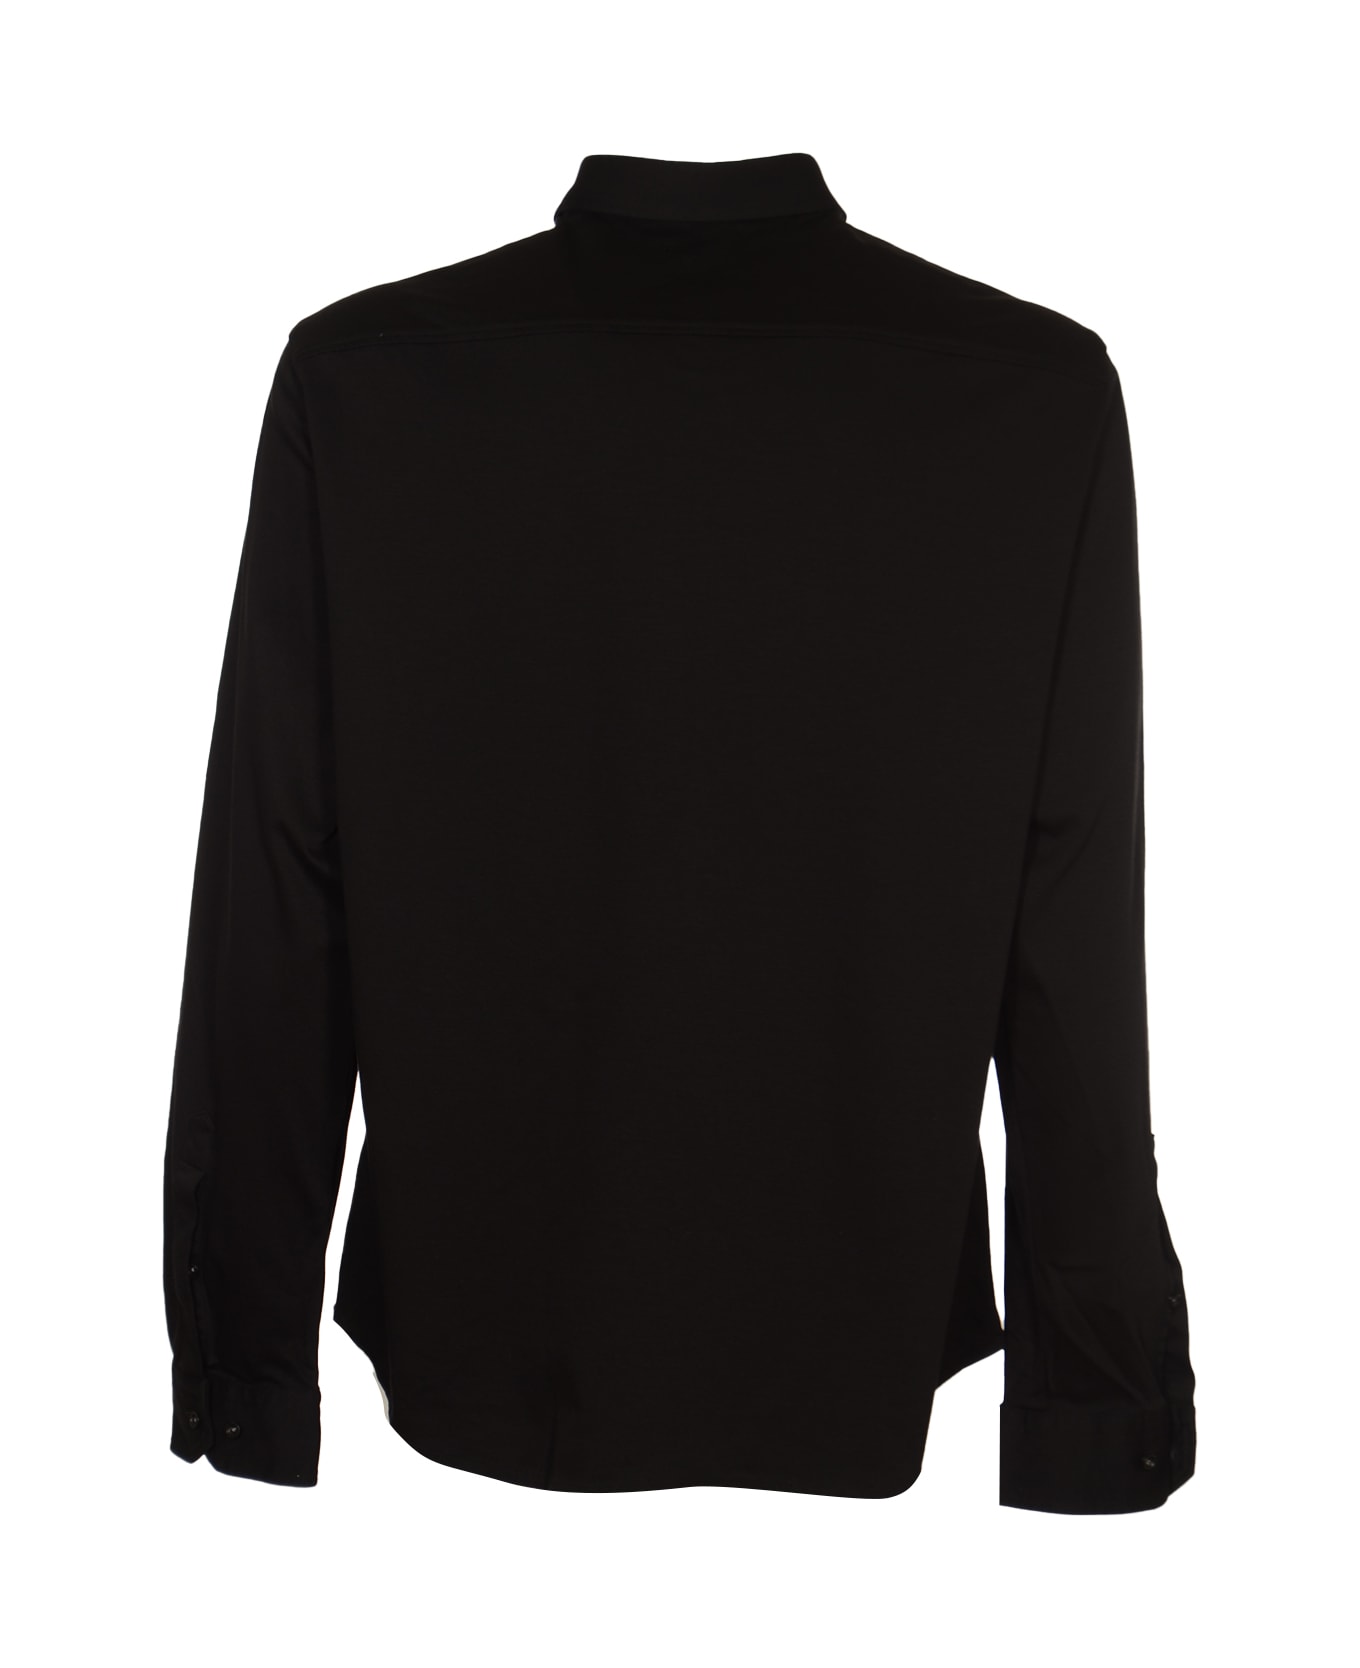 Hugo Boss Button Down Collar Cotton Shirt - Black